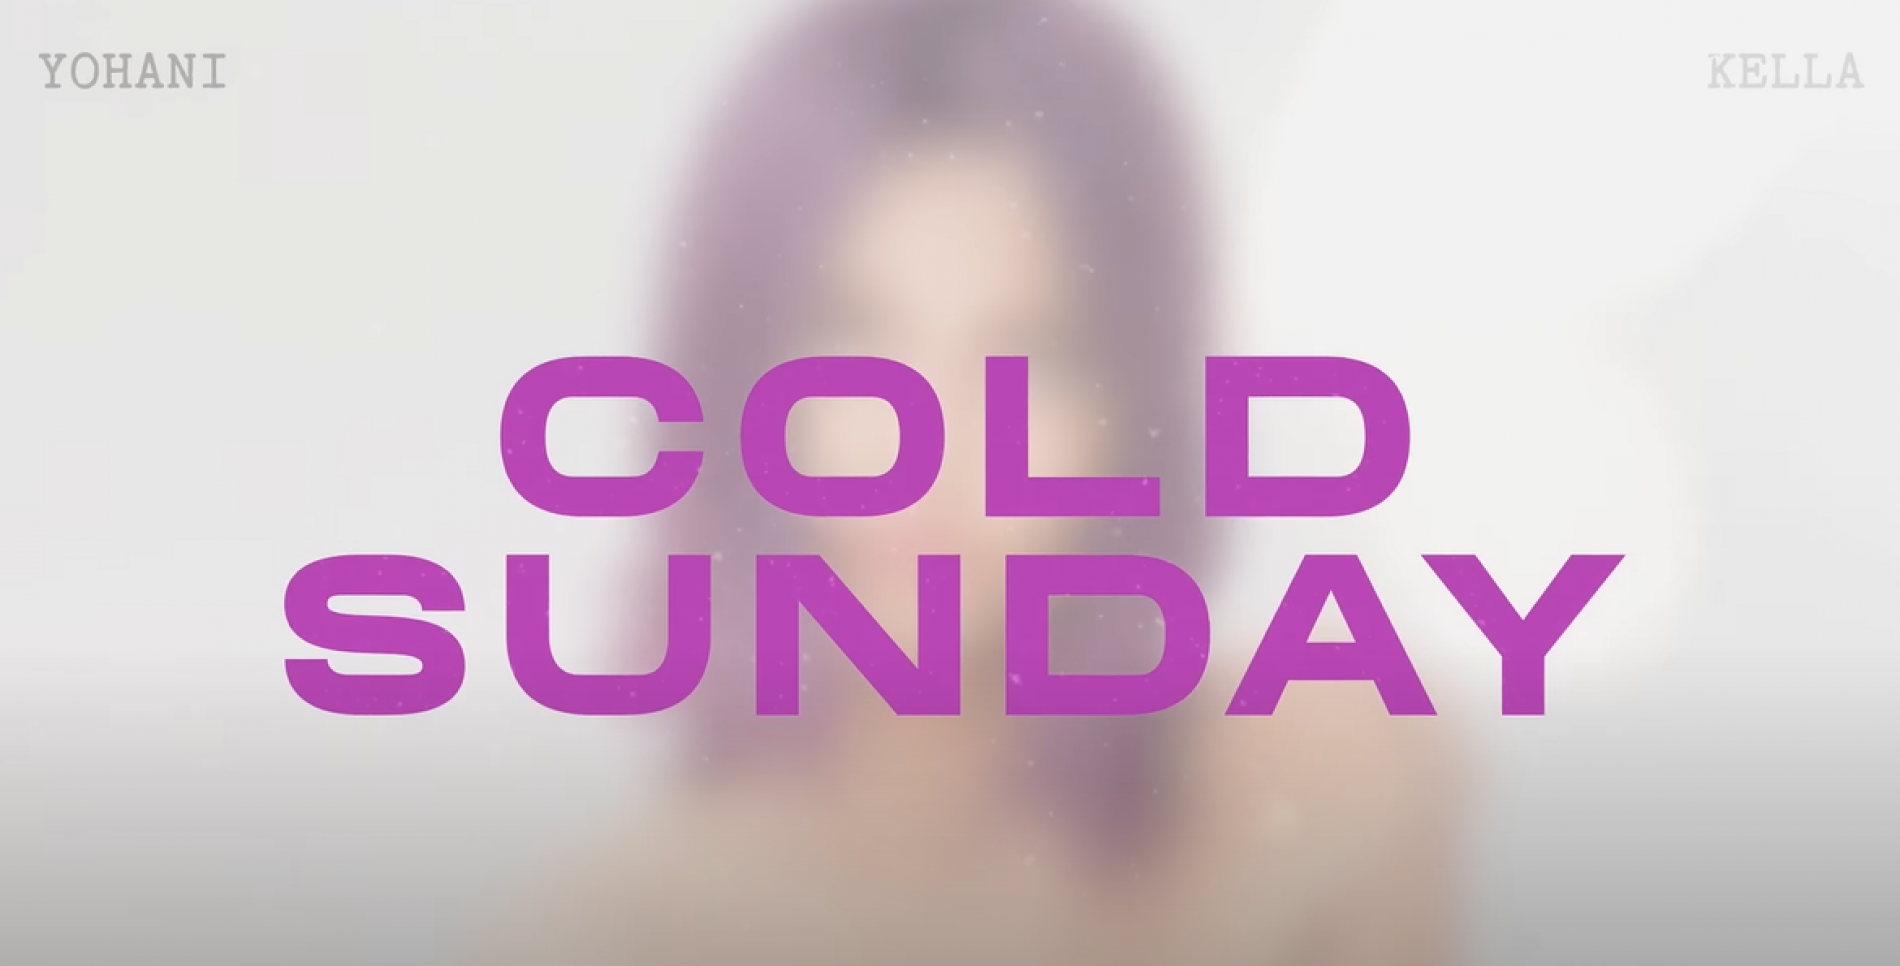 New Music : Yohani – Cold Sunday (Visualizer Lyric Video)